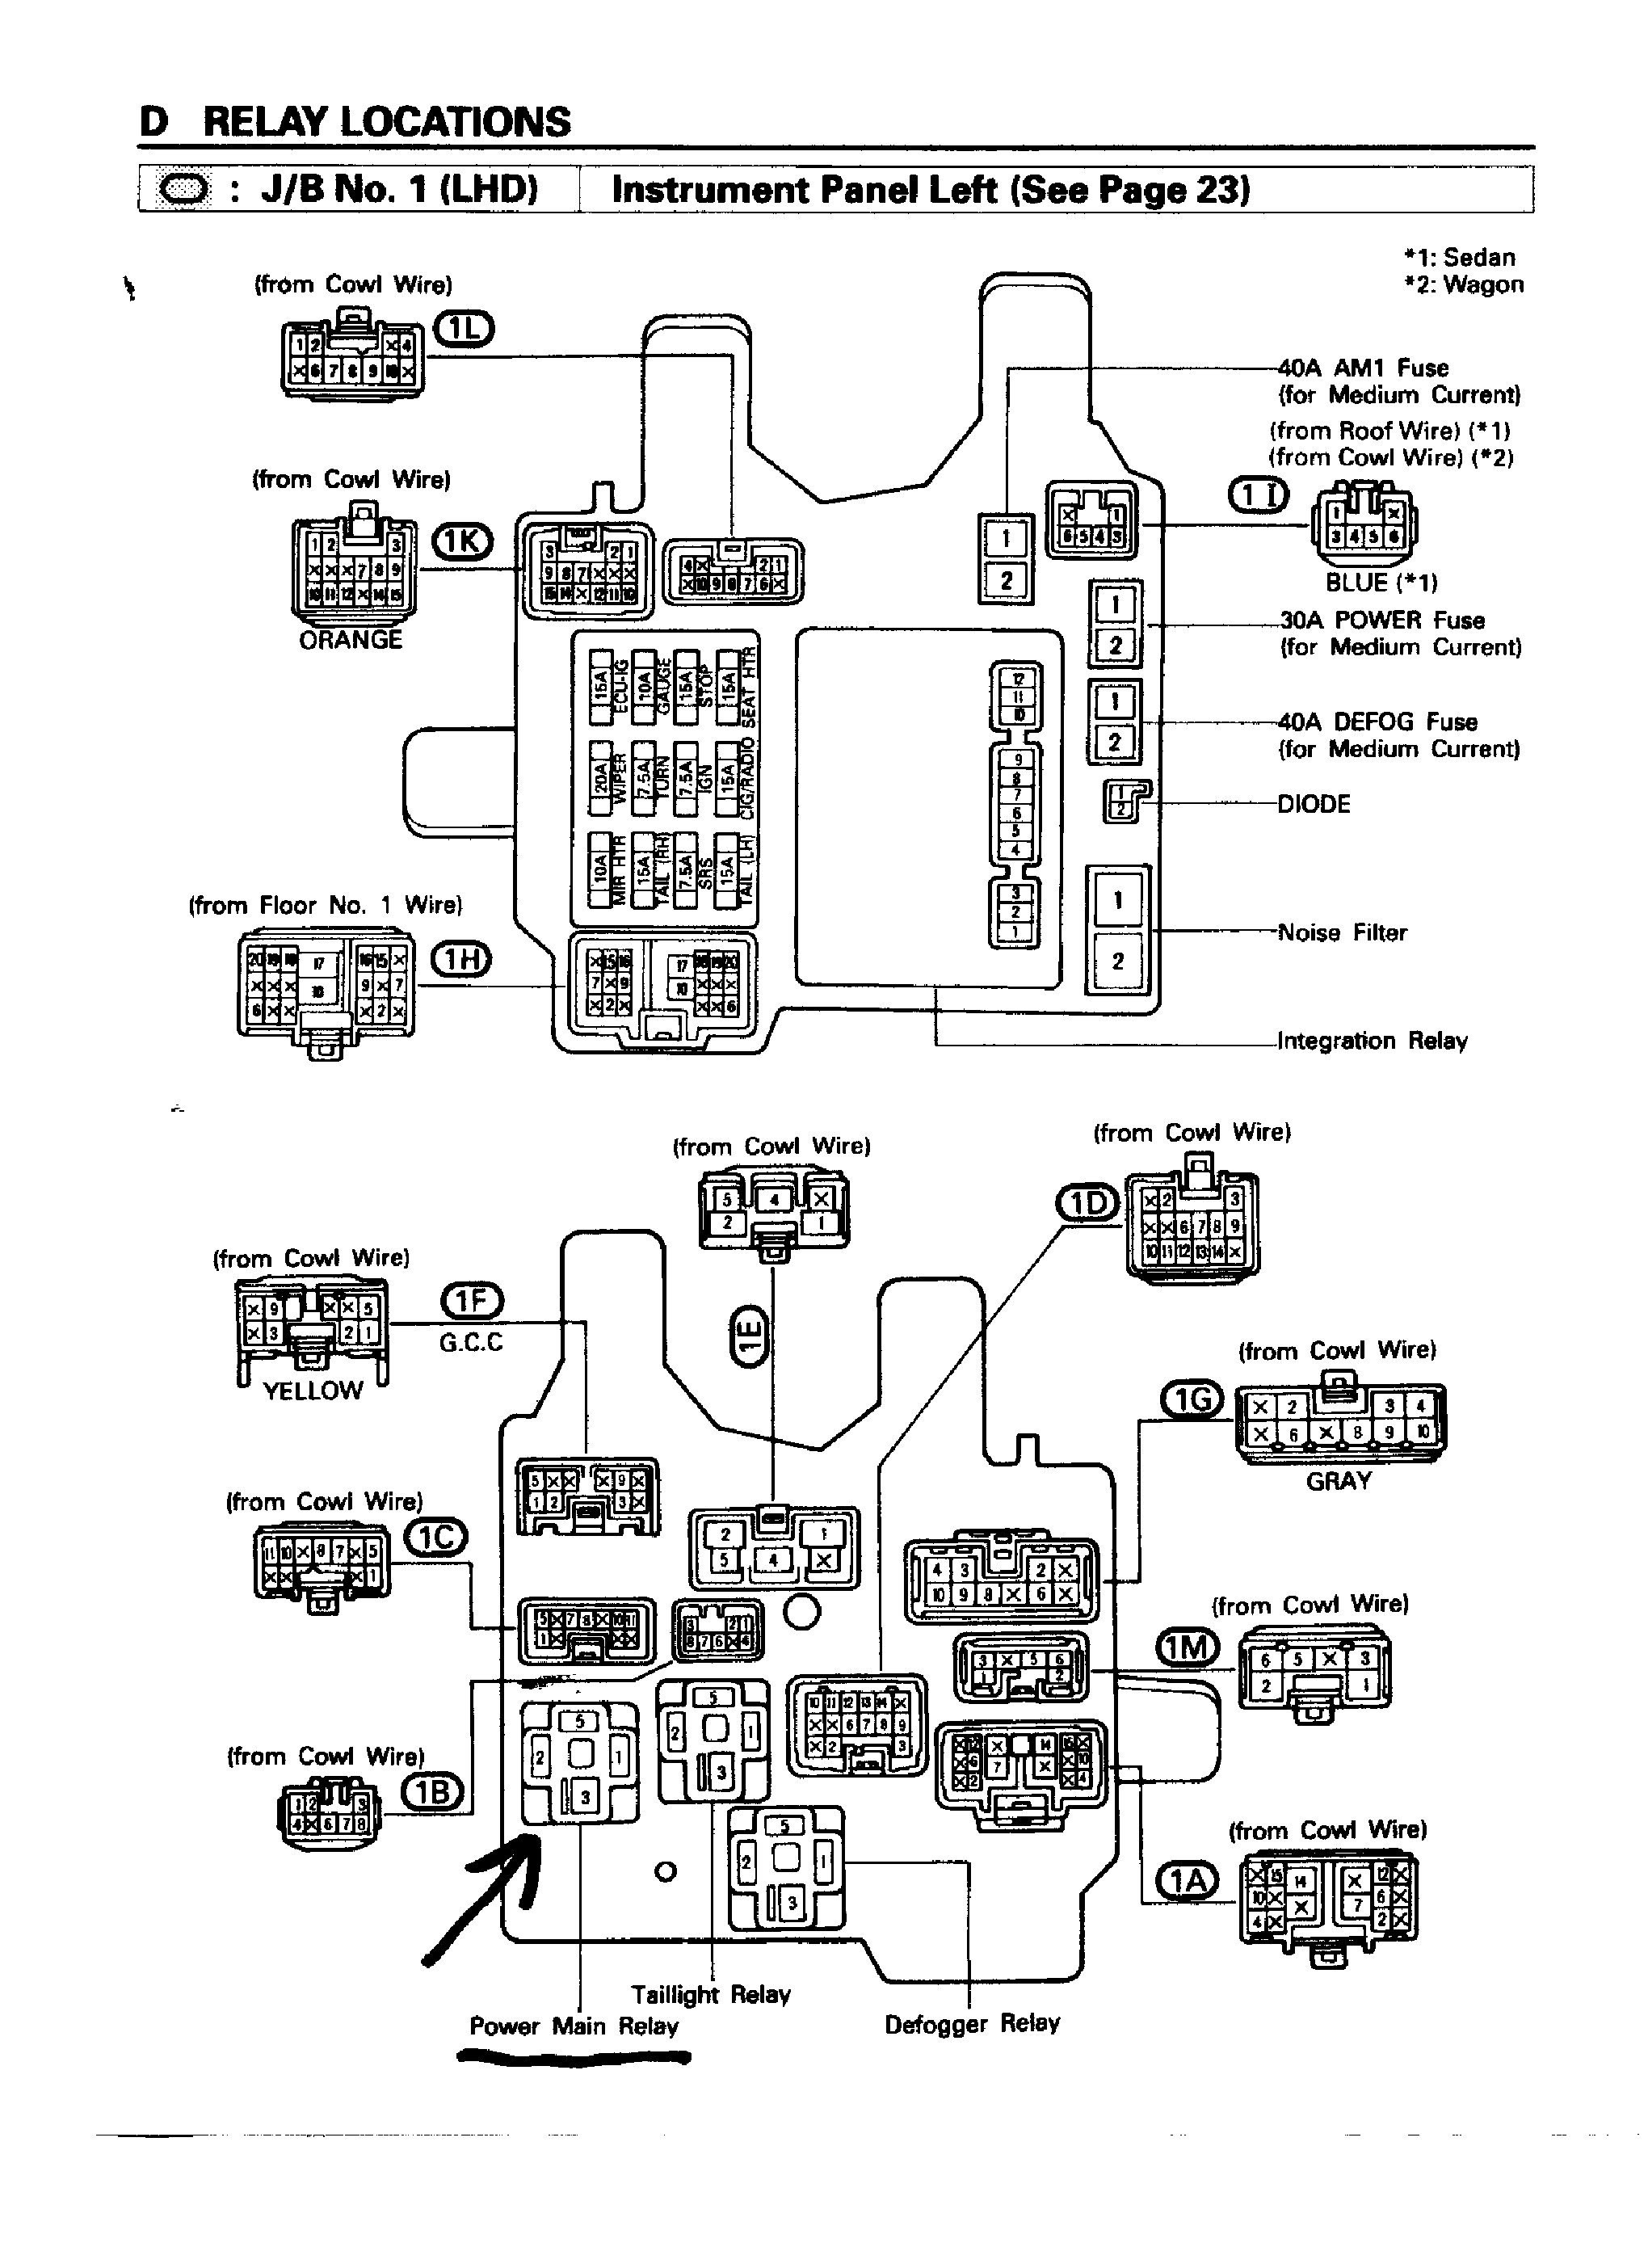 Toyota Stereo Wiring Diagram 1994 toyota Radio Wiring Diagram Schema Wiring Diagram Of Toyota Stereo Wiring Diagram